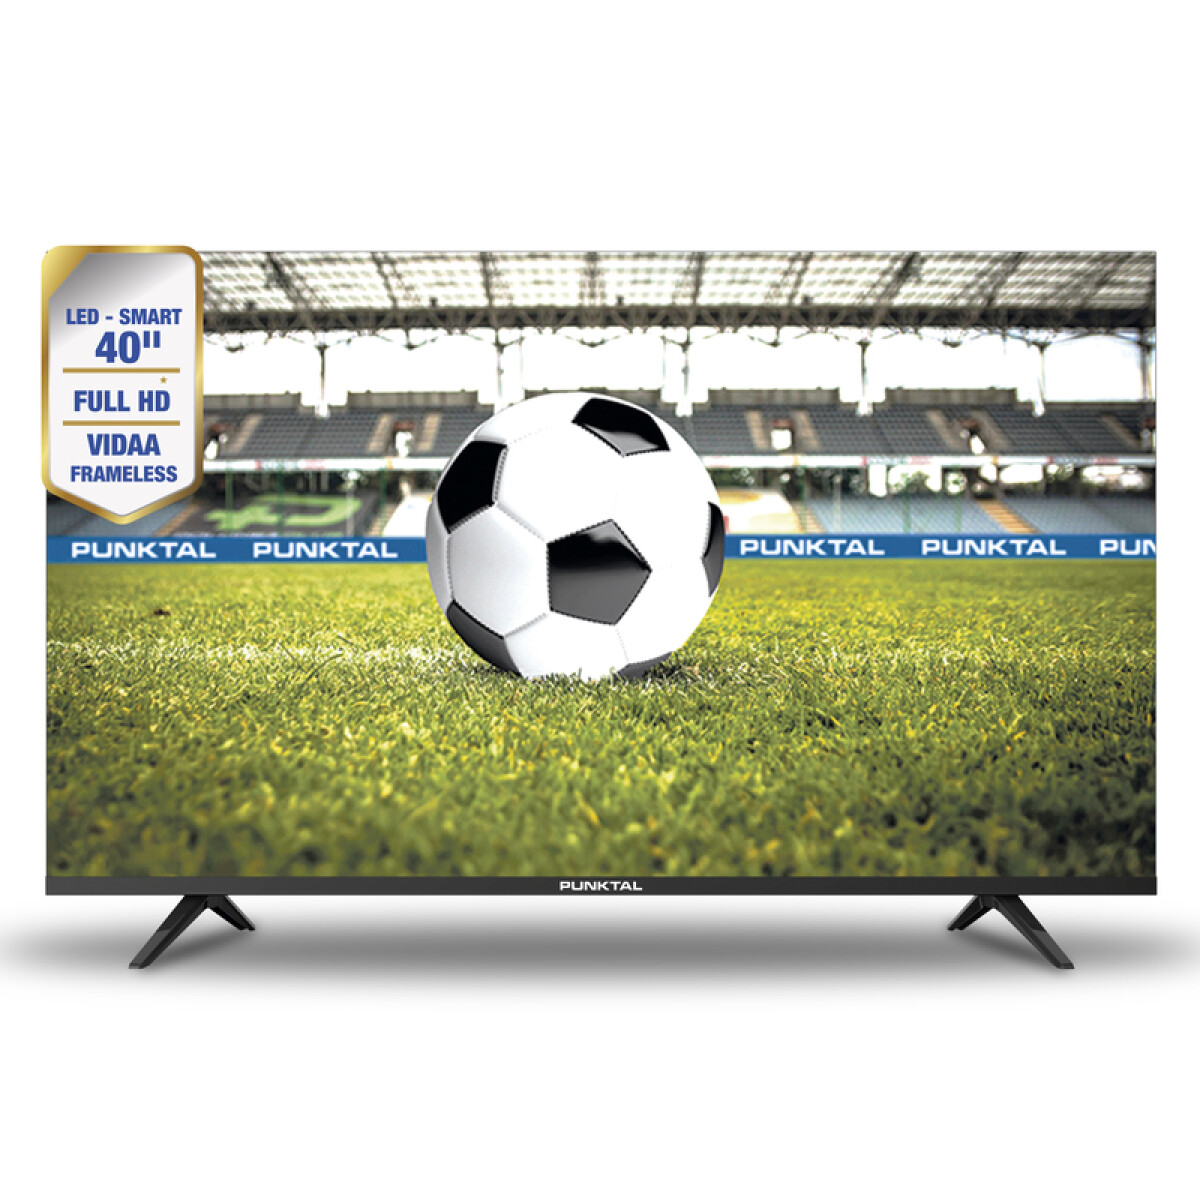 TV LED 40" HD Smart Frameless Punktal VIDAA 